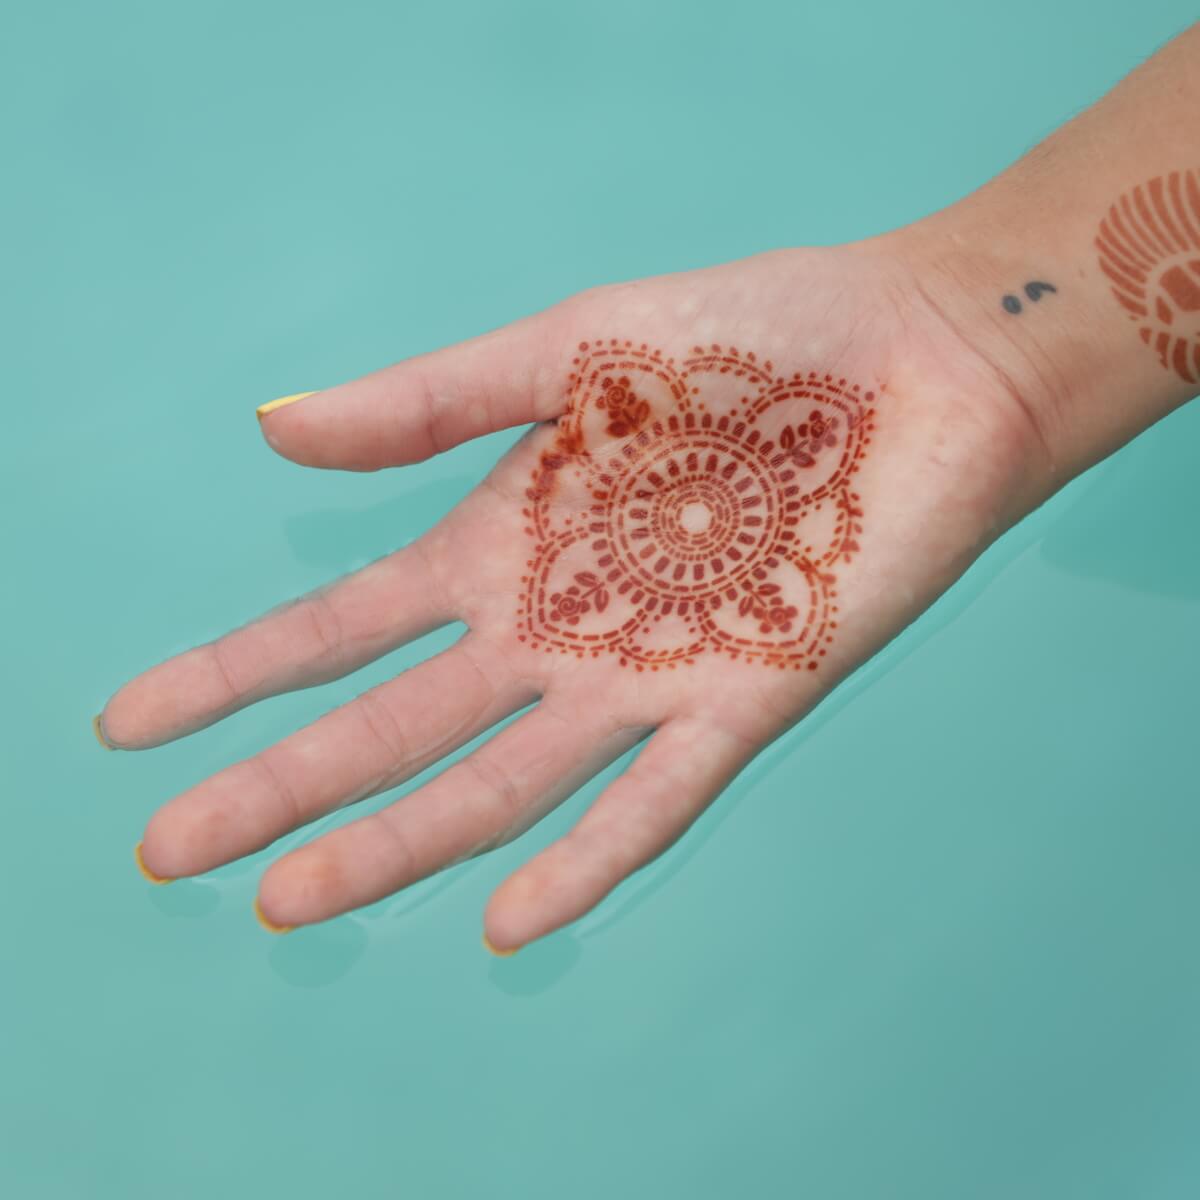 Buy Henna  Lace Realistic Temporary Tattoo Mandala Ornament Online in  India  Etsy